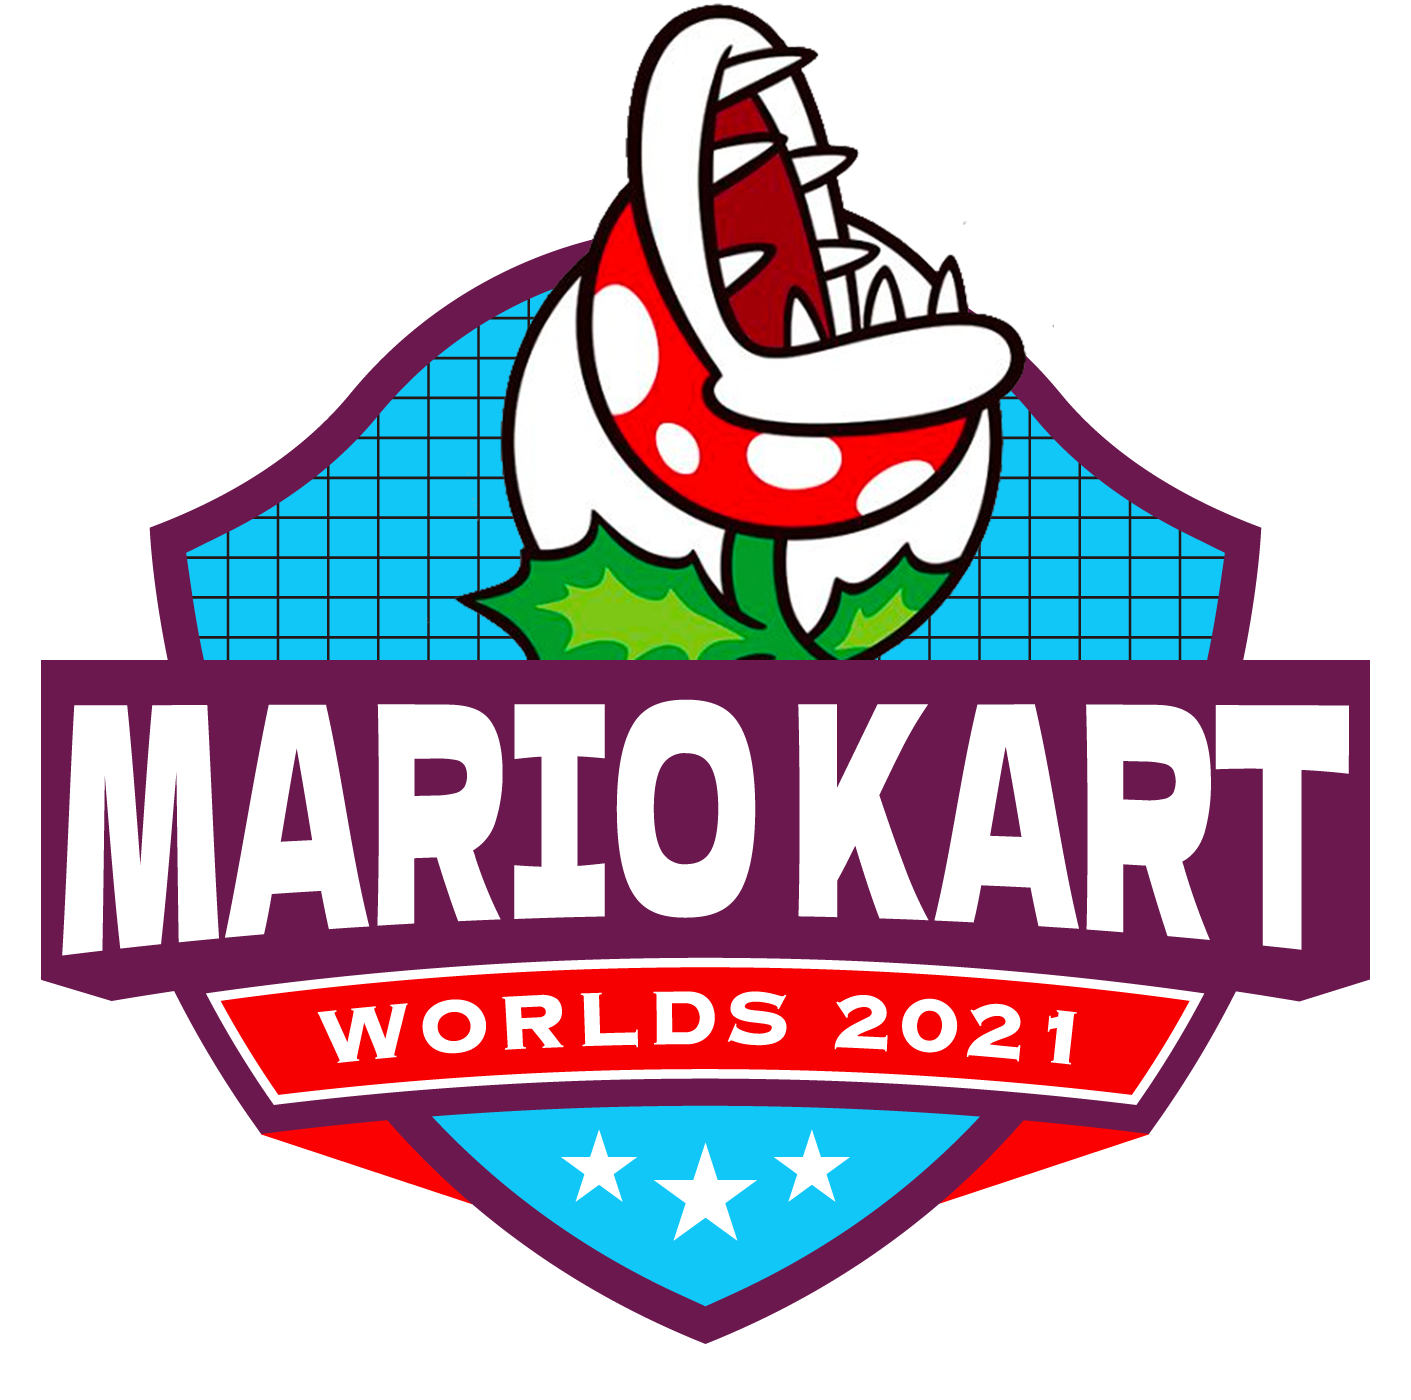 Mario Kart Central, Tournaments